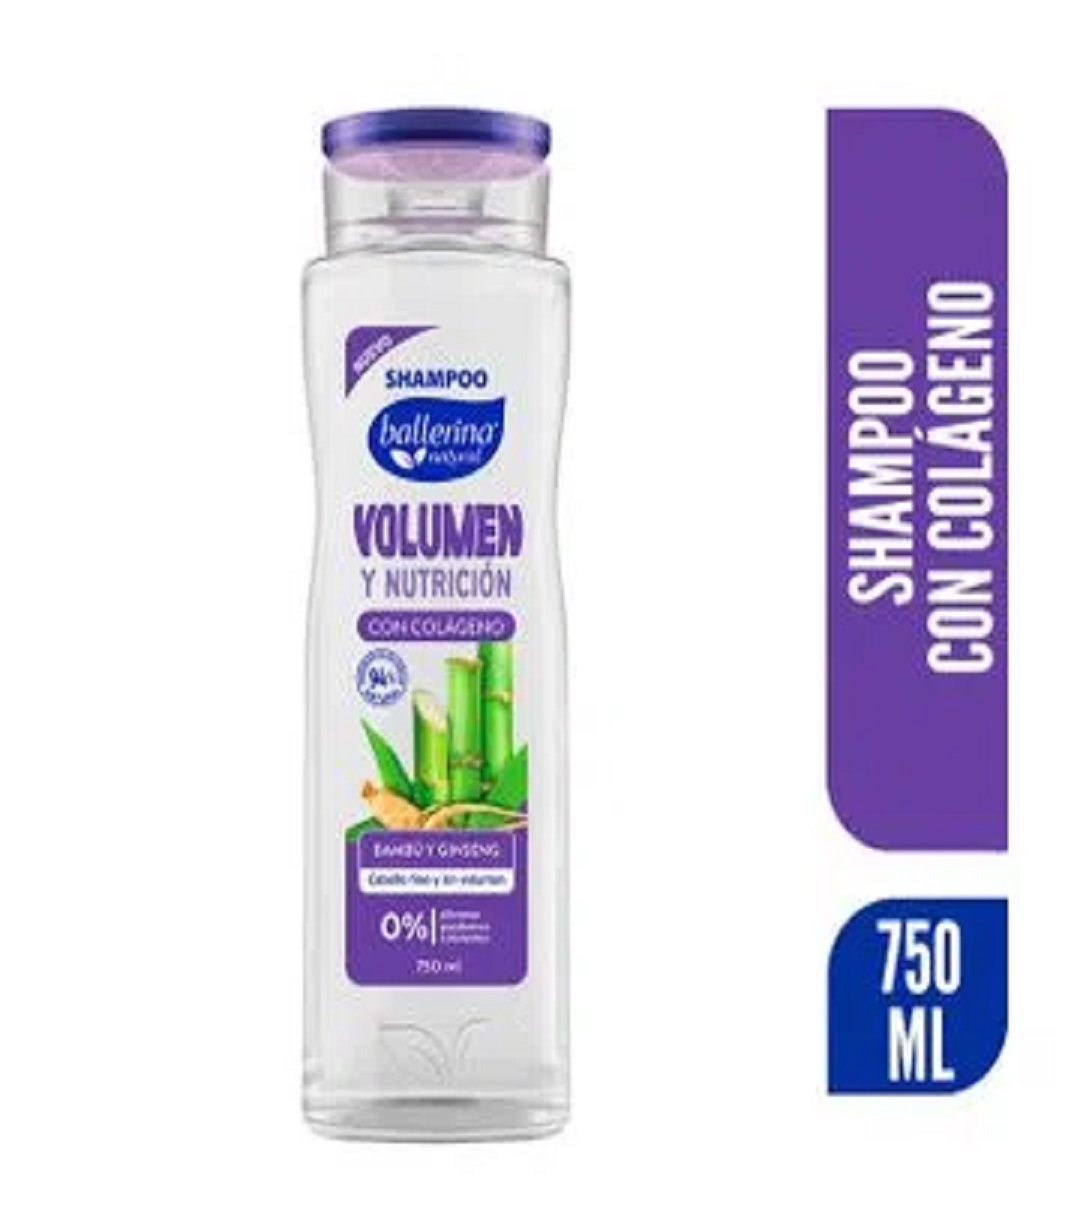 Shampoo Ballerina Botella Volumen y Nutricion 750ml